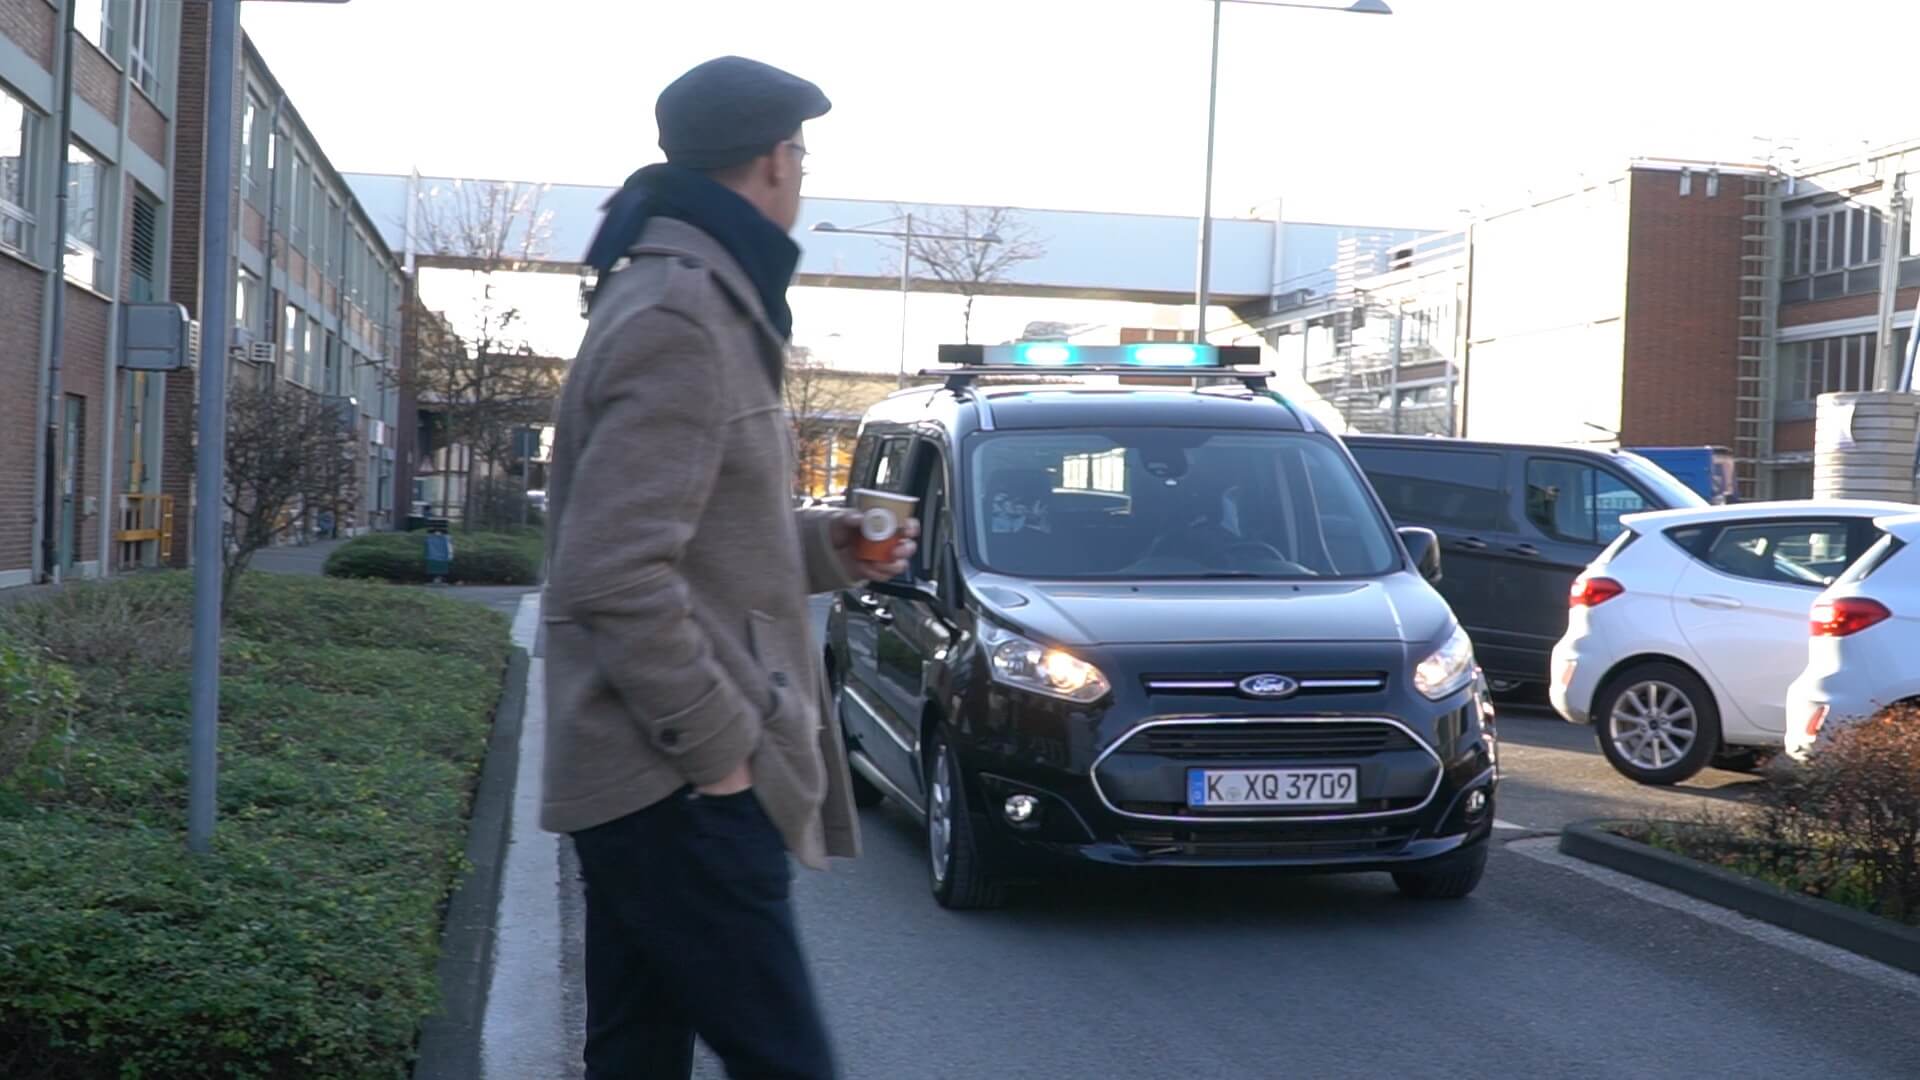 Ford: Επικοινωνία πεζών με αυτόνομα οχήματα μέσω οπτικών σημάτων [vid]